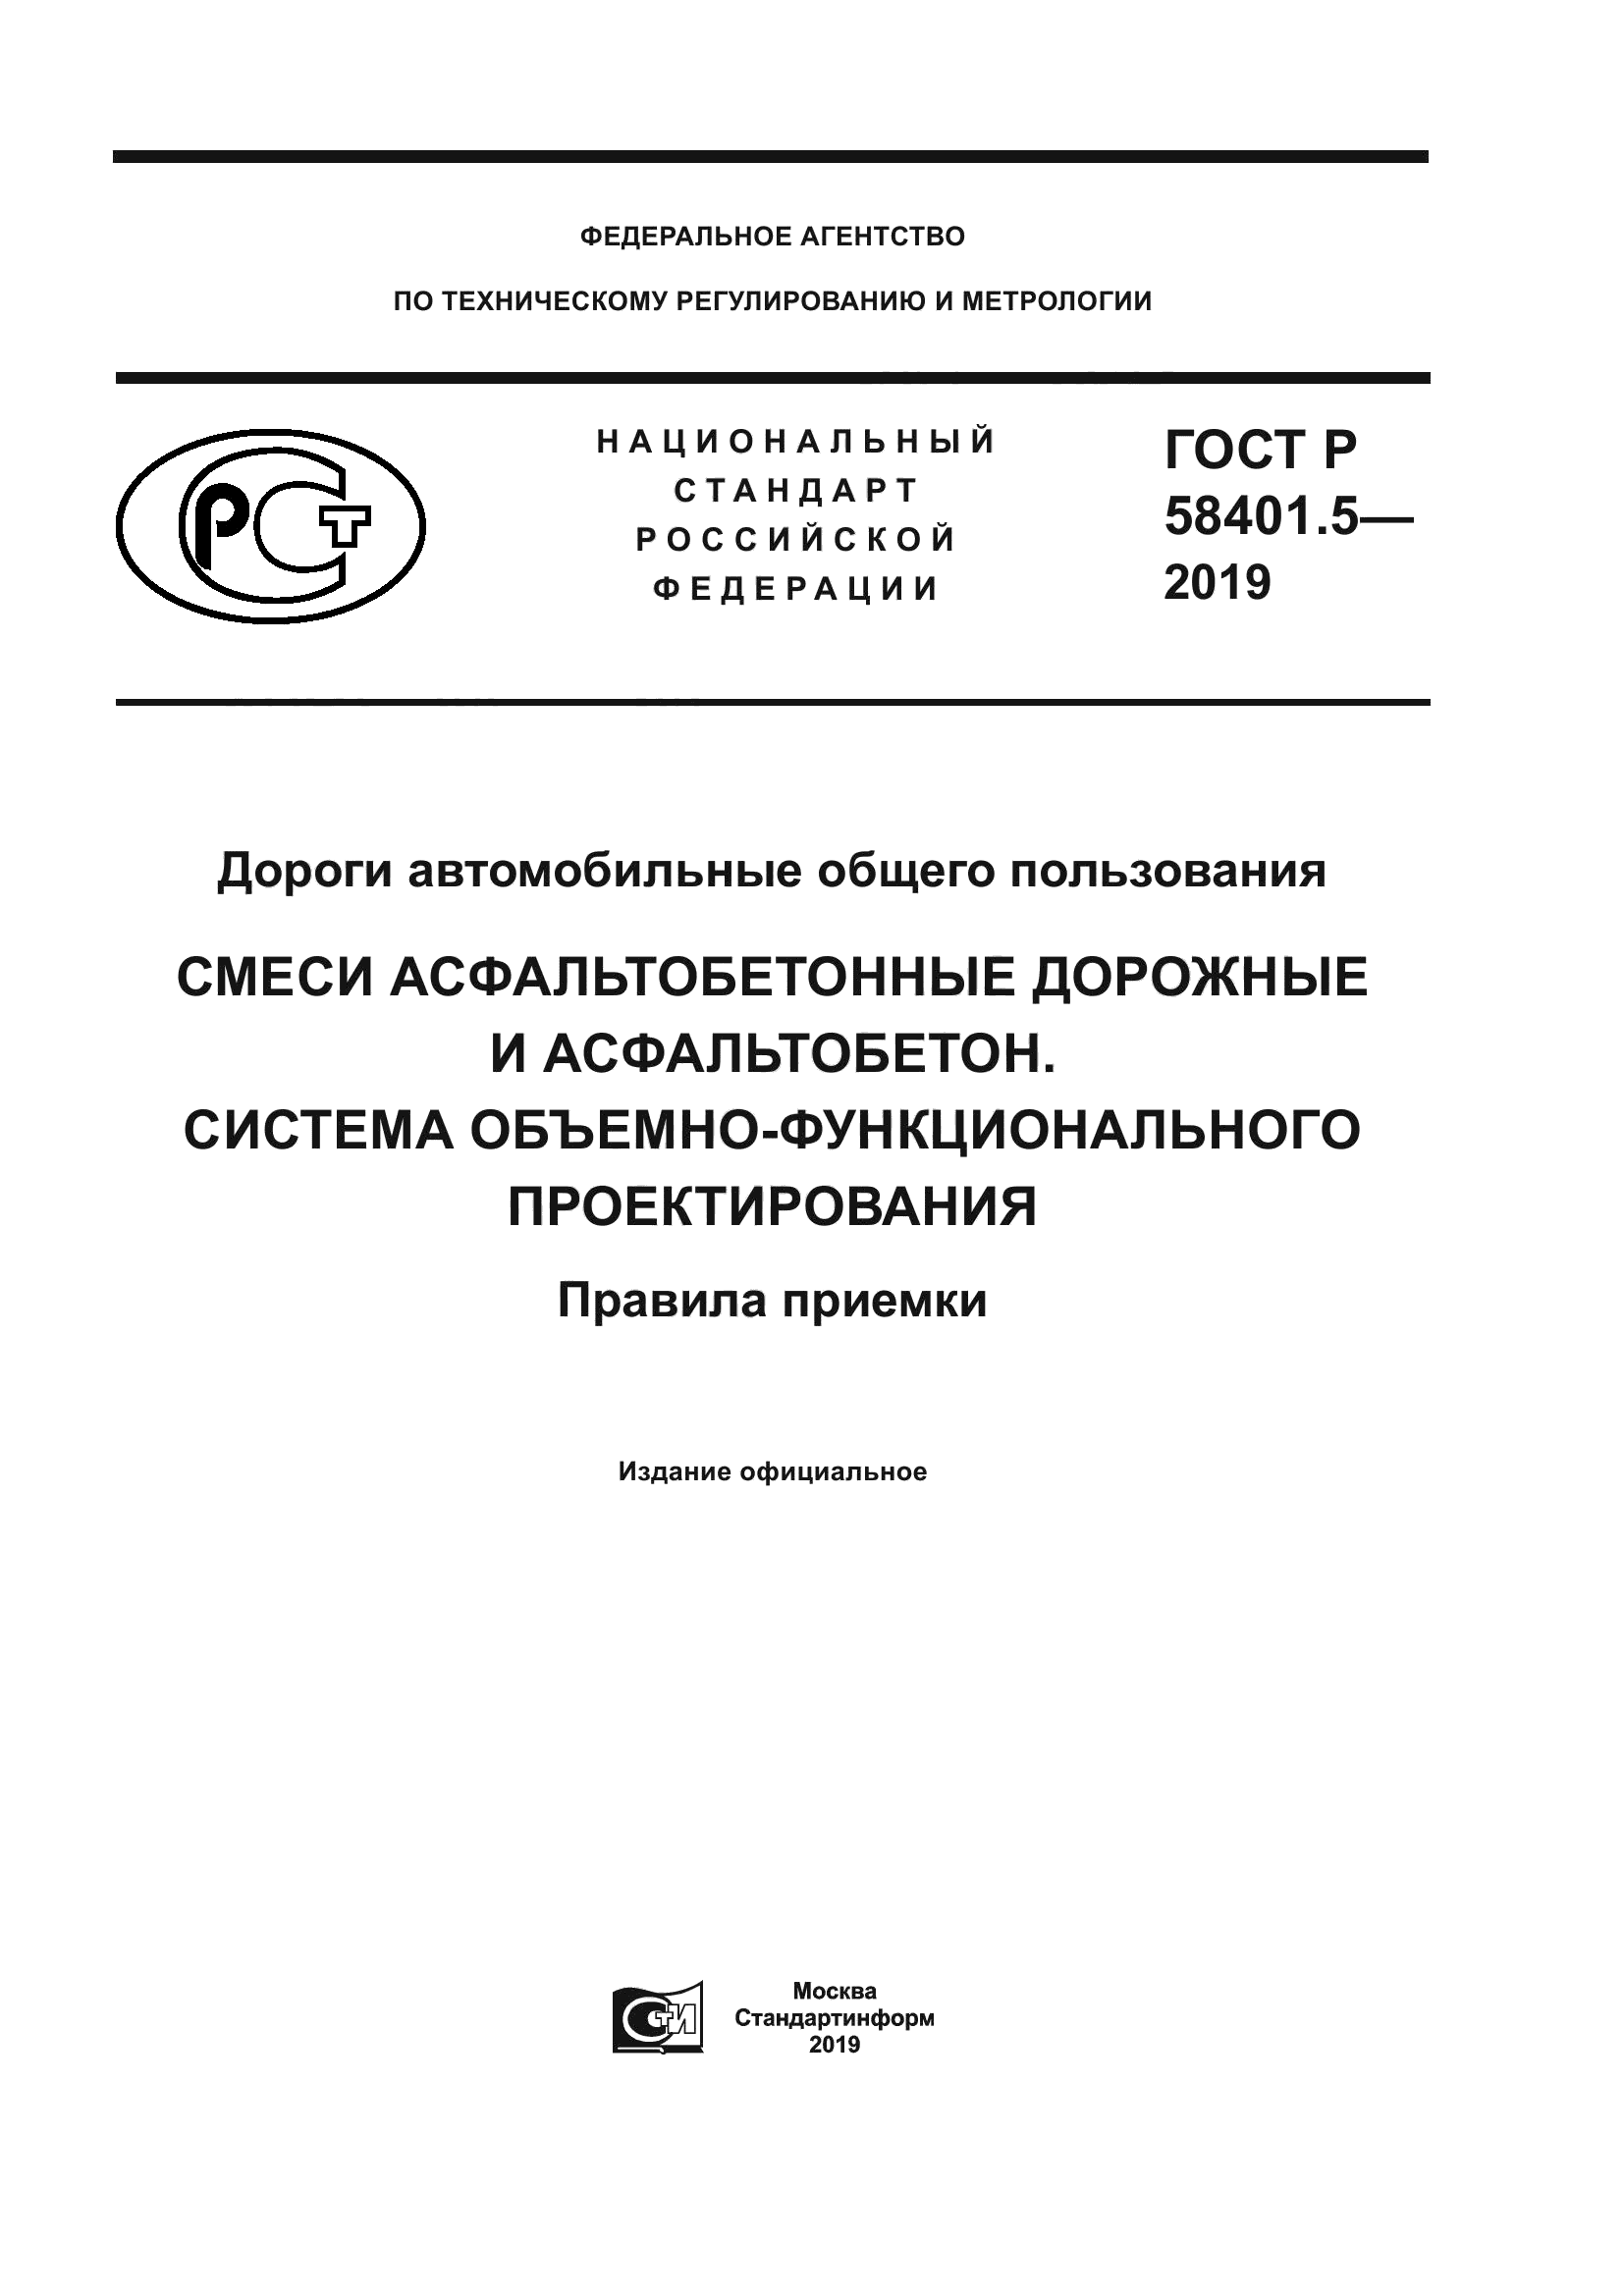 ГОСТ Р 58401.5-2019